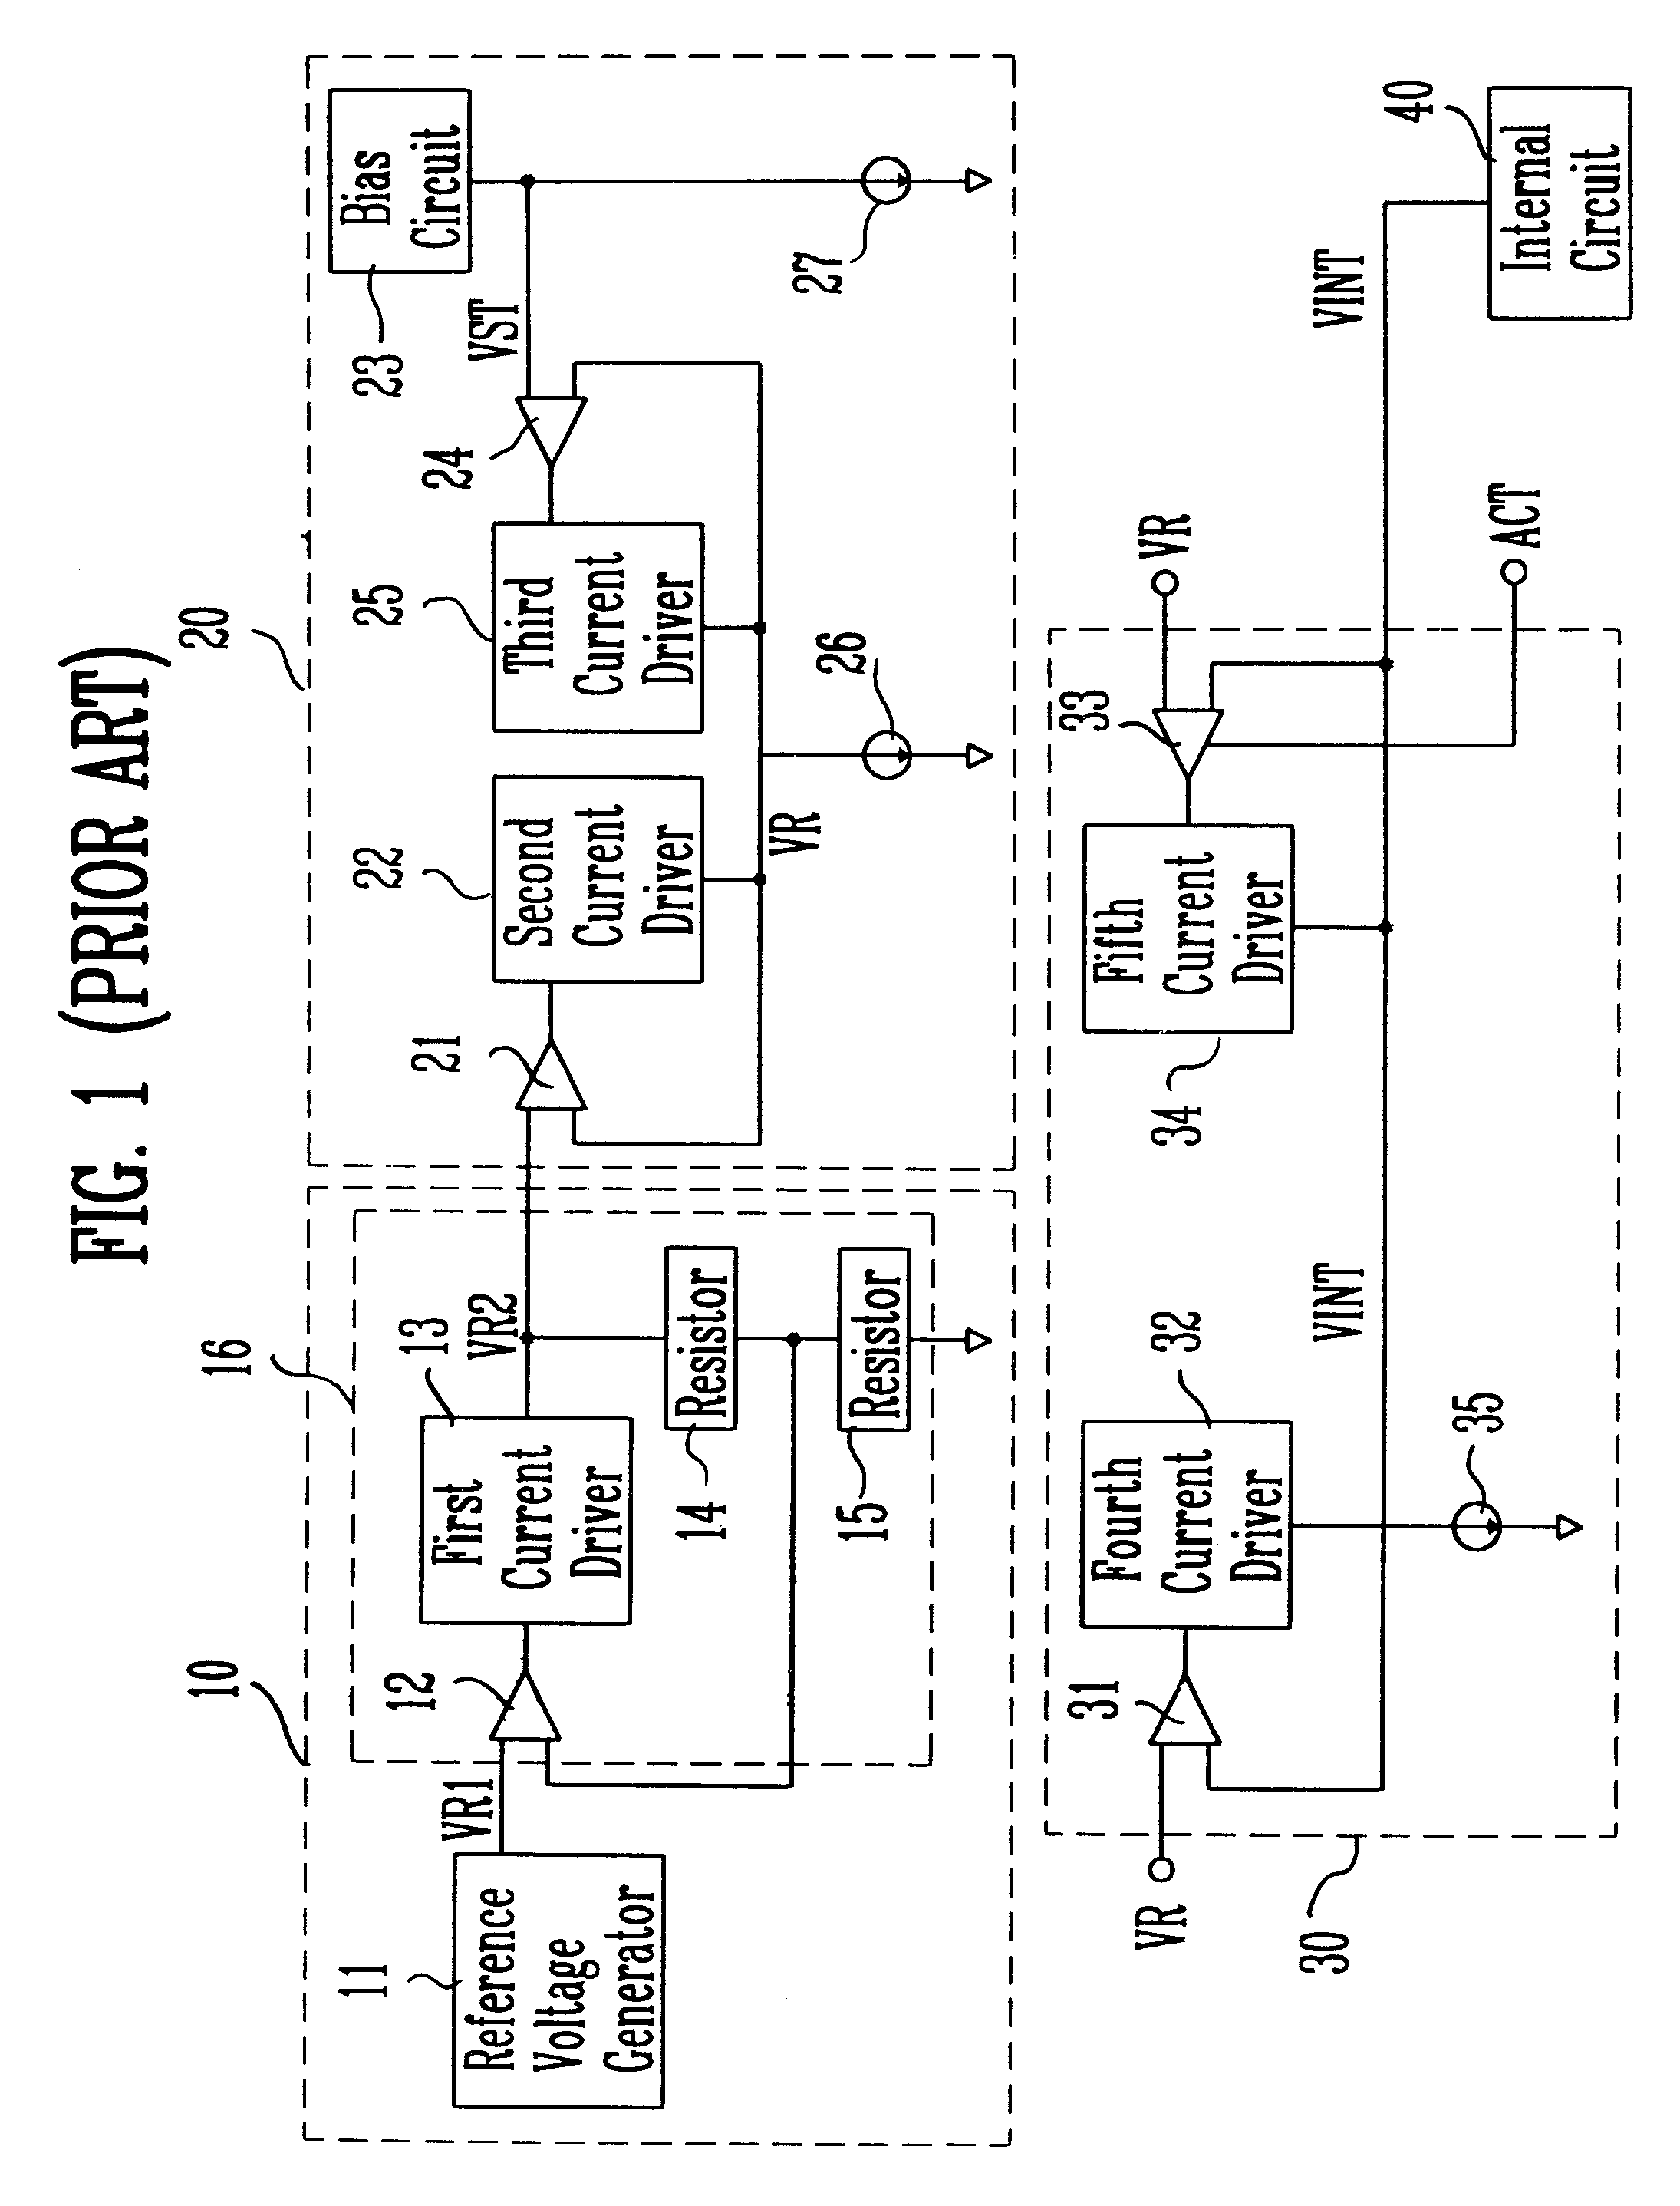 Internal voltage fall-down circuit